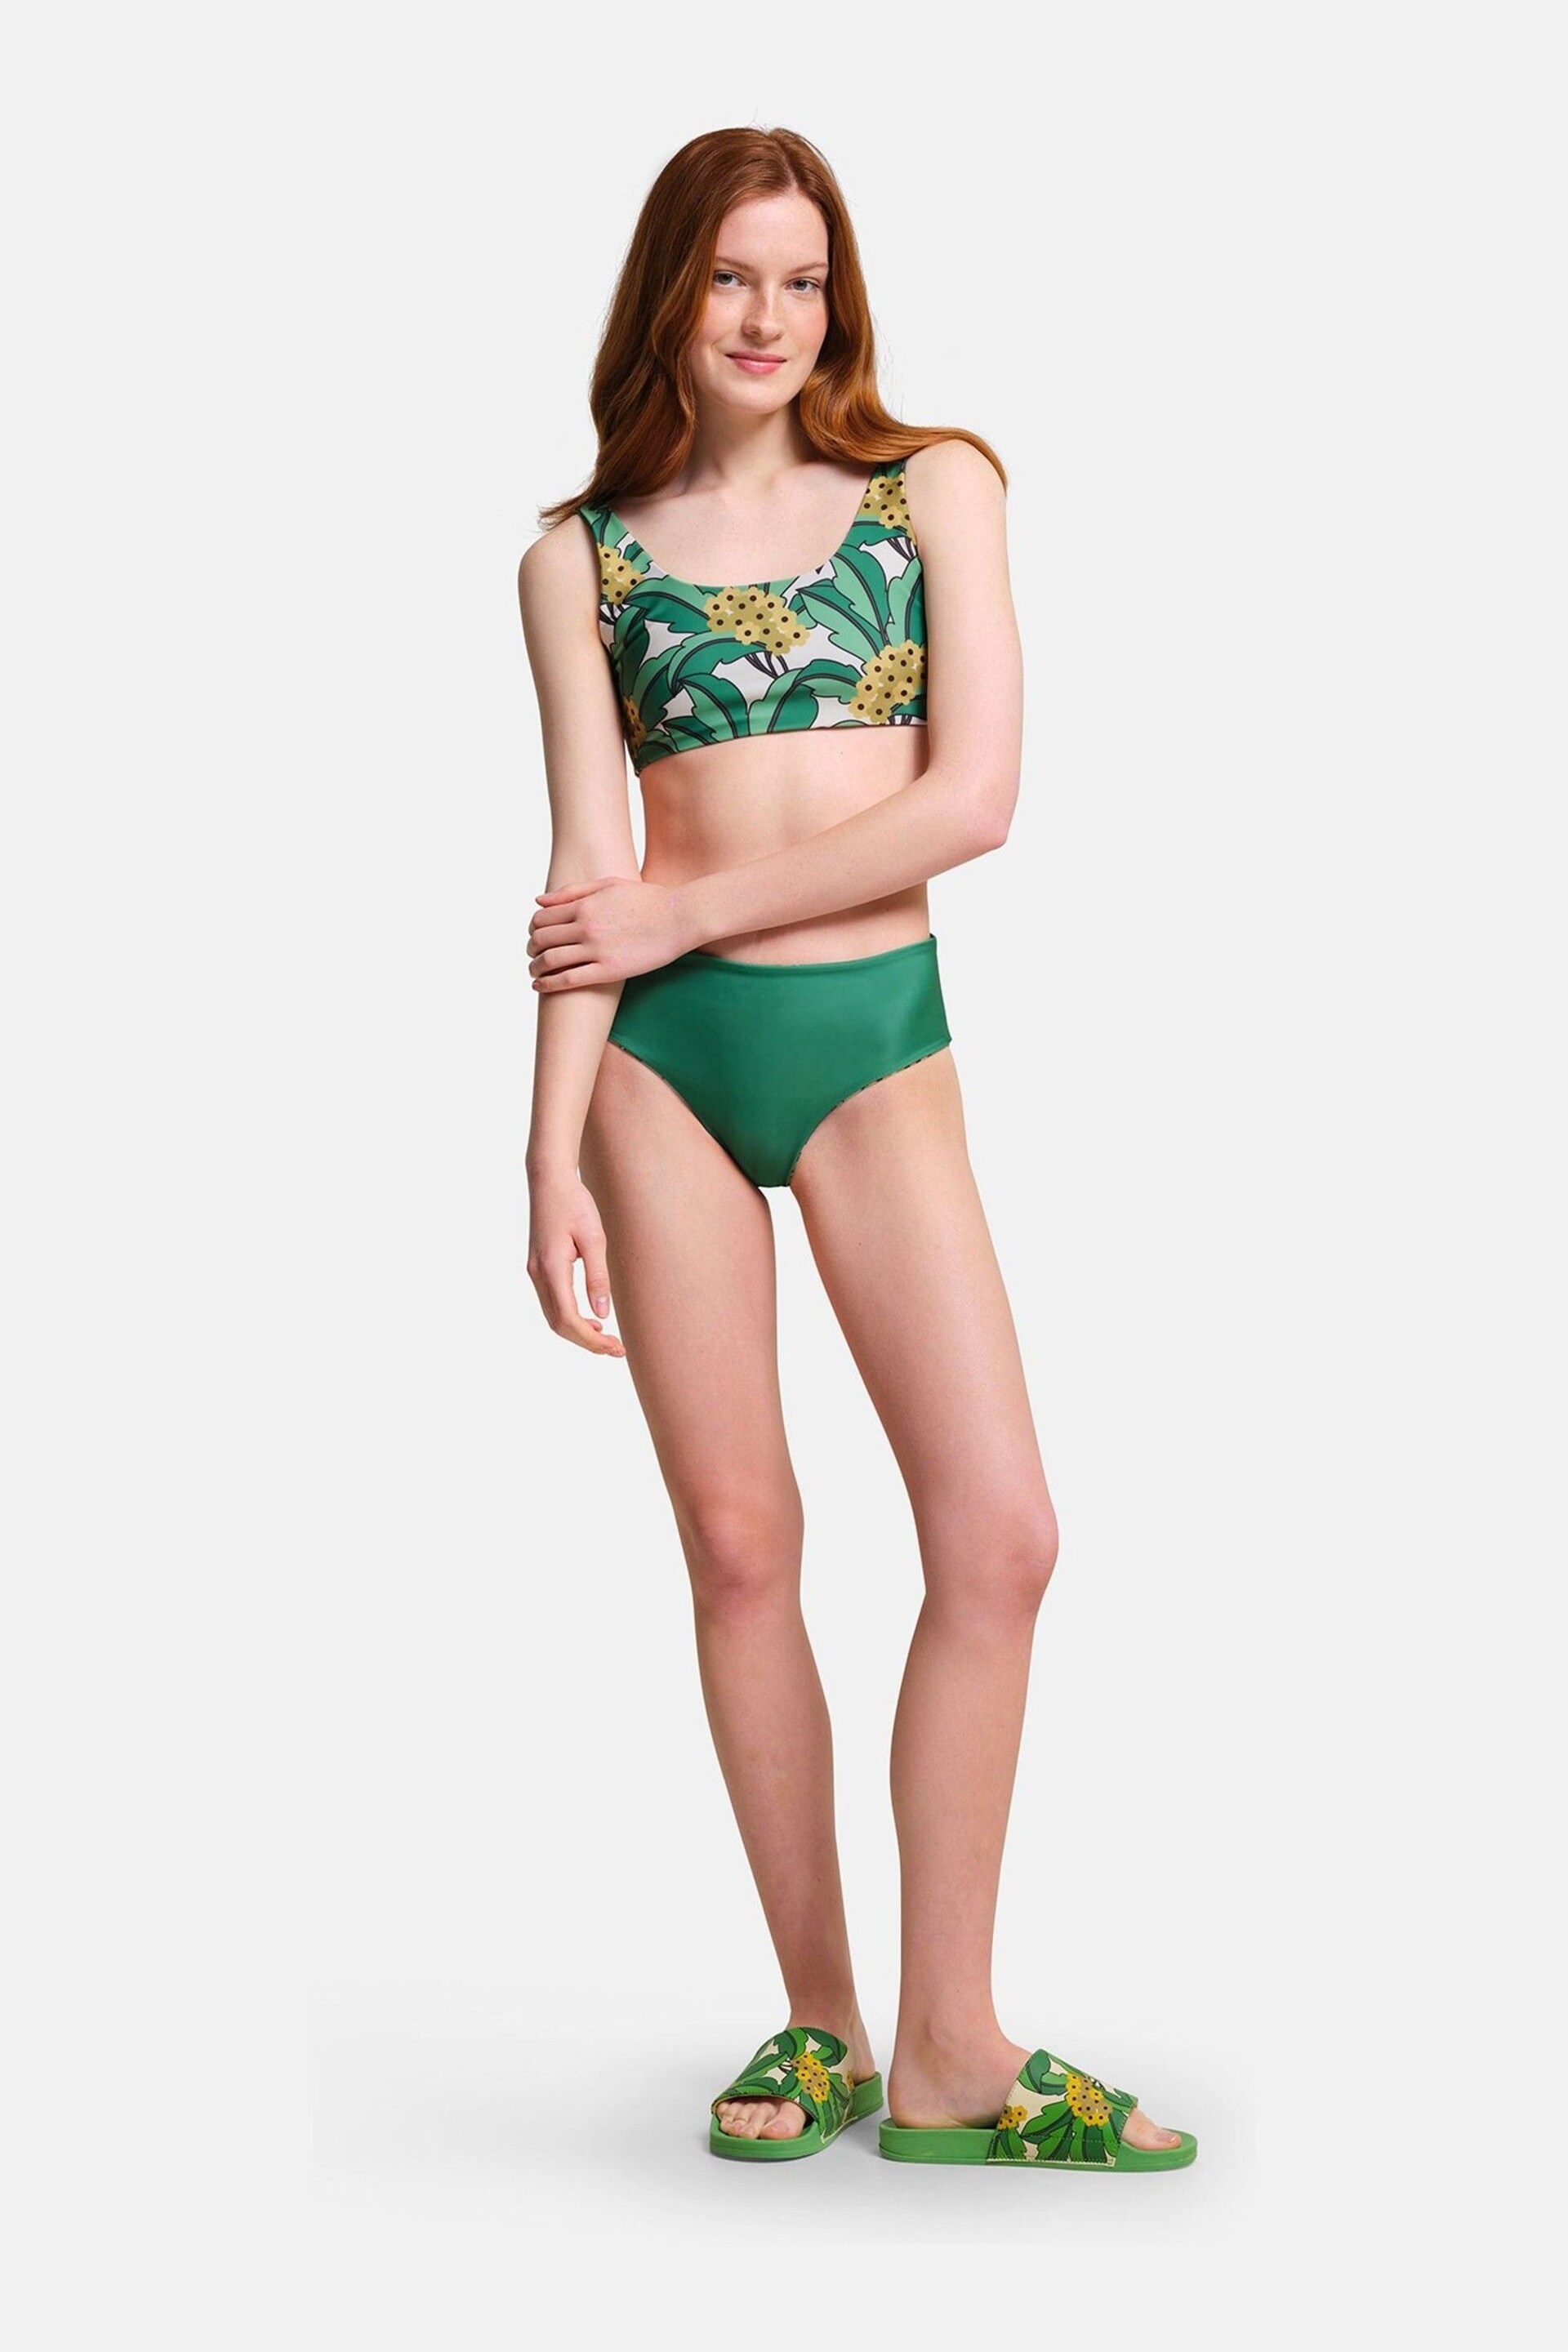 Regatta Green Orla Kiely Reversible Bikini Set - Image 4 of 9